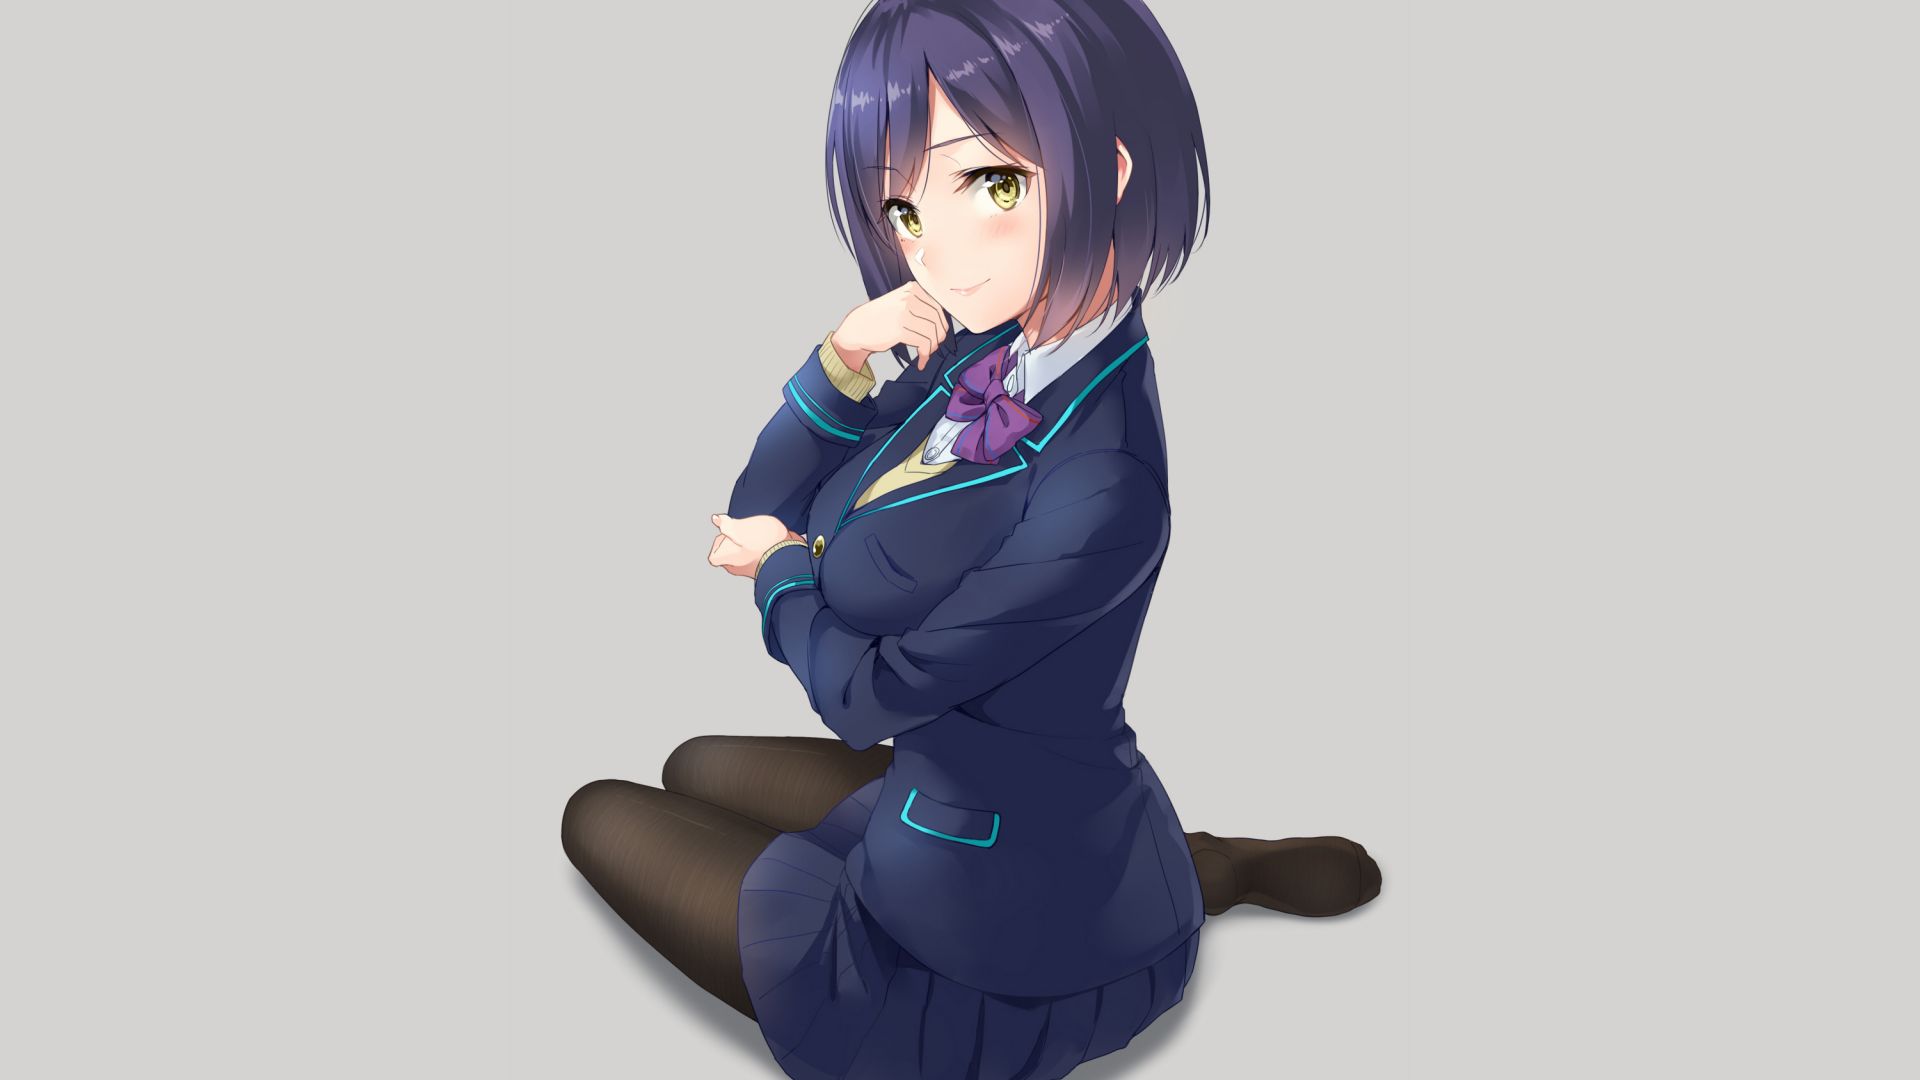 Desktop wallpaper calm, cute, anime girl, school uniform, HD image, picture, background, f0eead